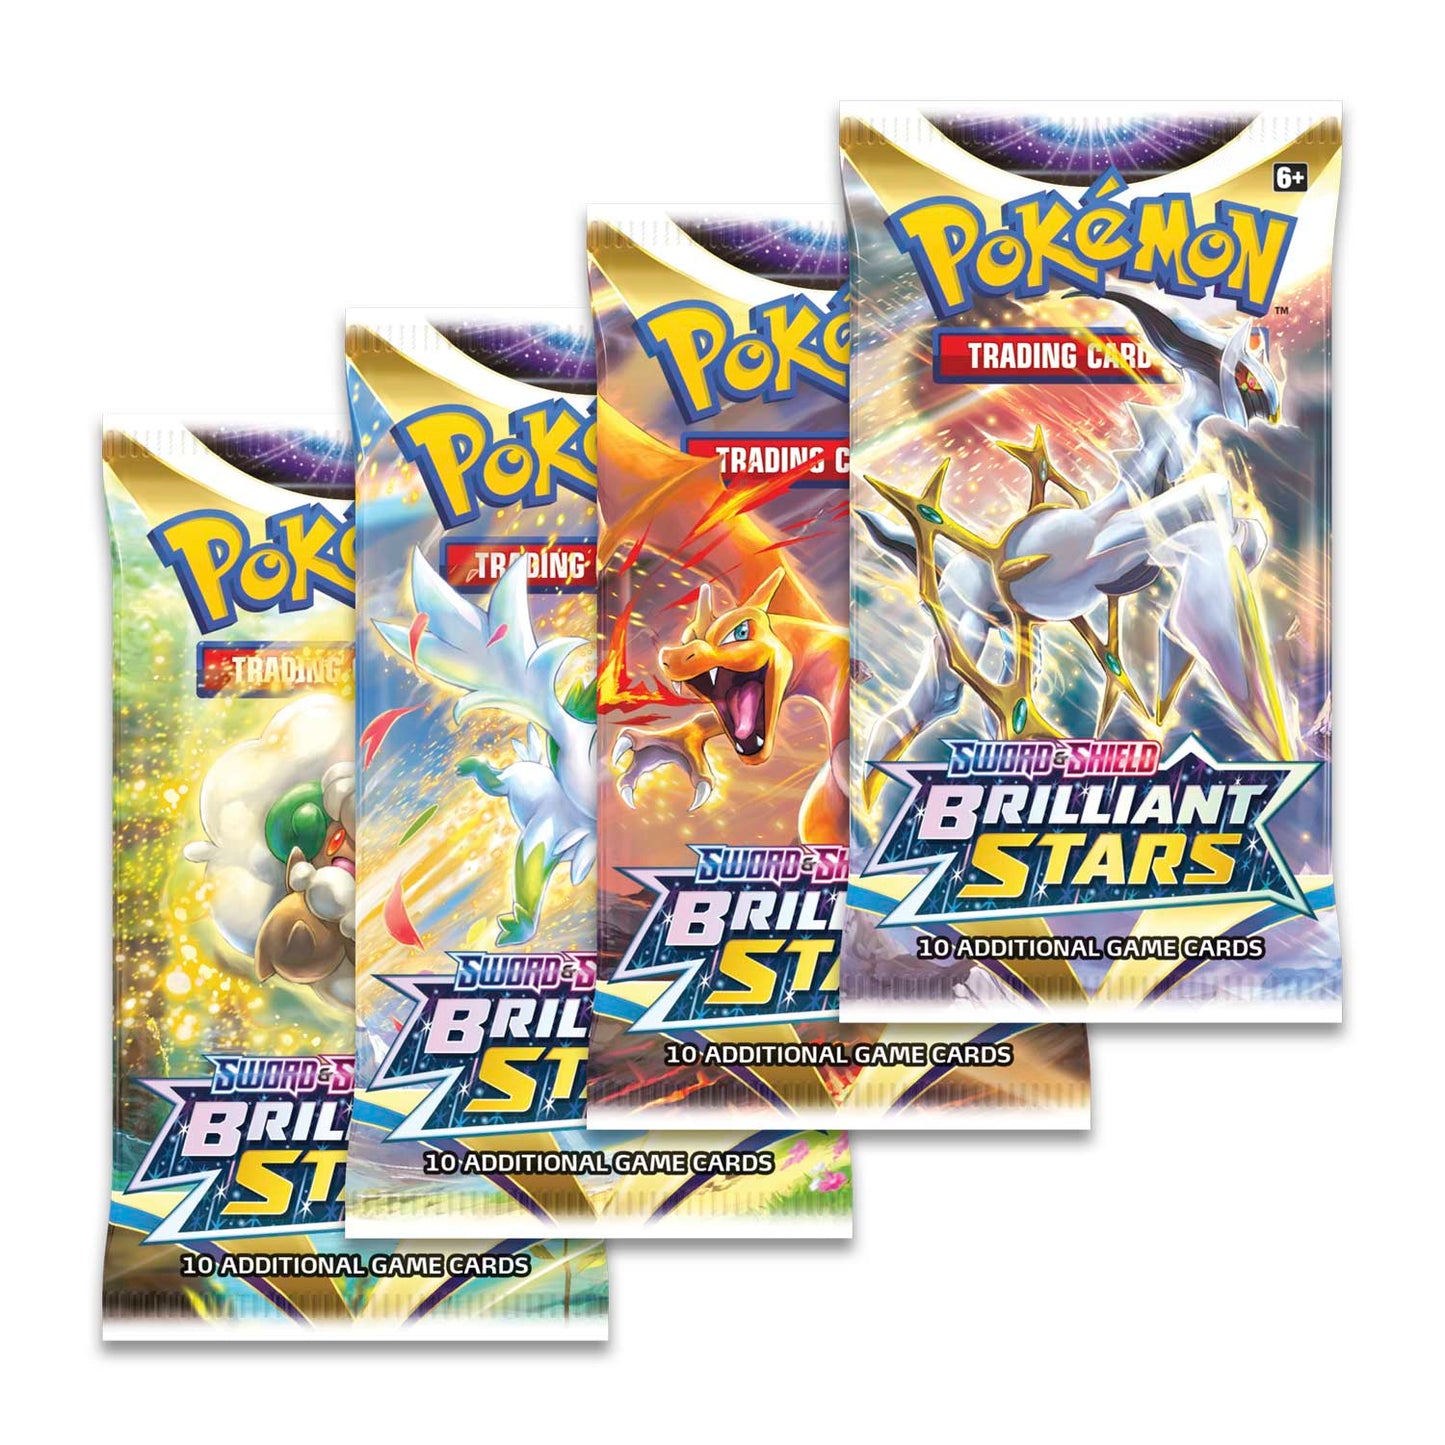 Pokémon TCG: Sword & Shield-Brilliant Stars Booster Pack (1 Pack)